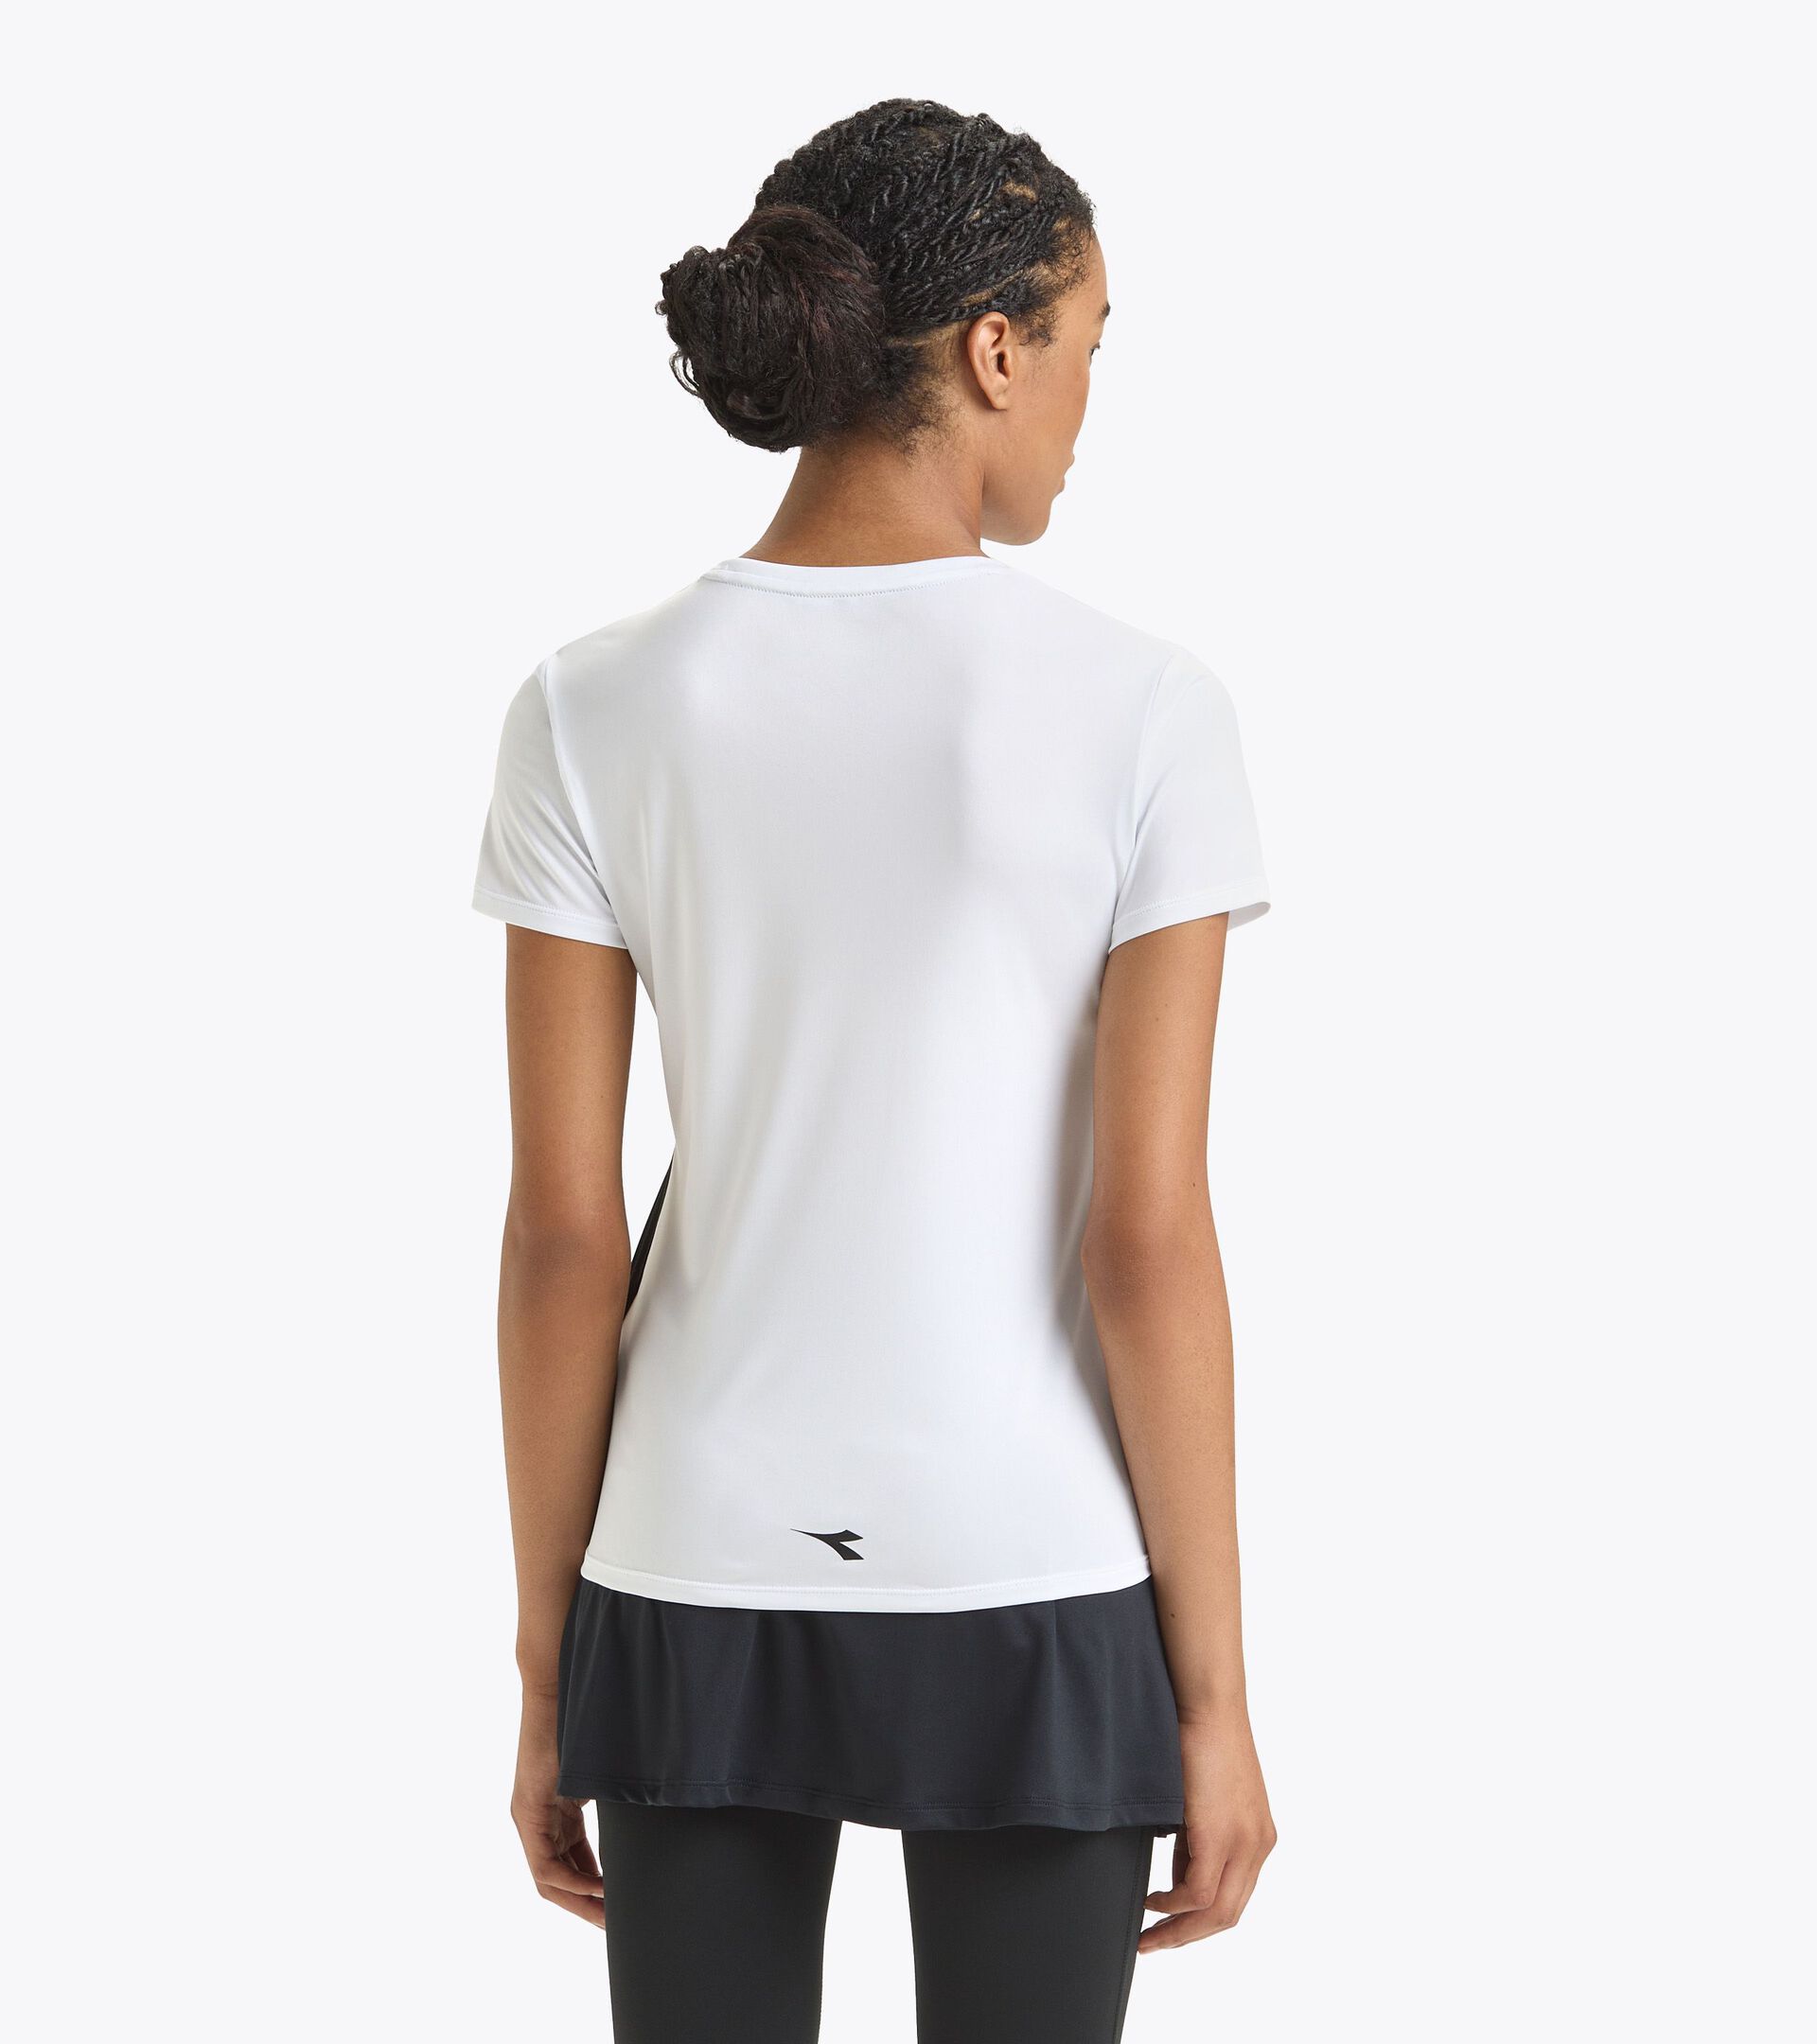 Camiseta de tenis - Mujer L. SS T-SHIRT BLANCO VIVO/NEGRO - Diadora